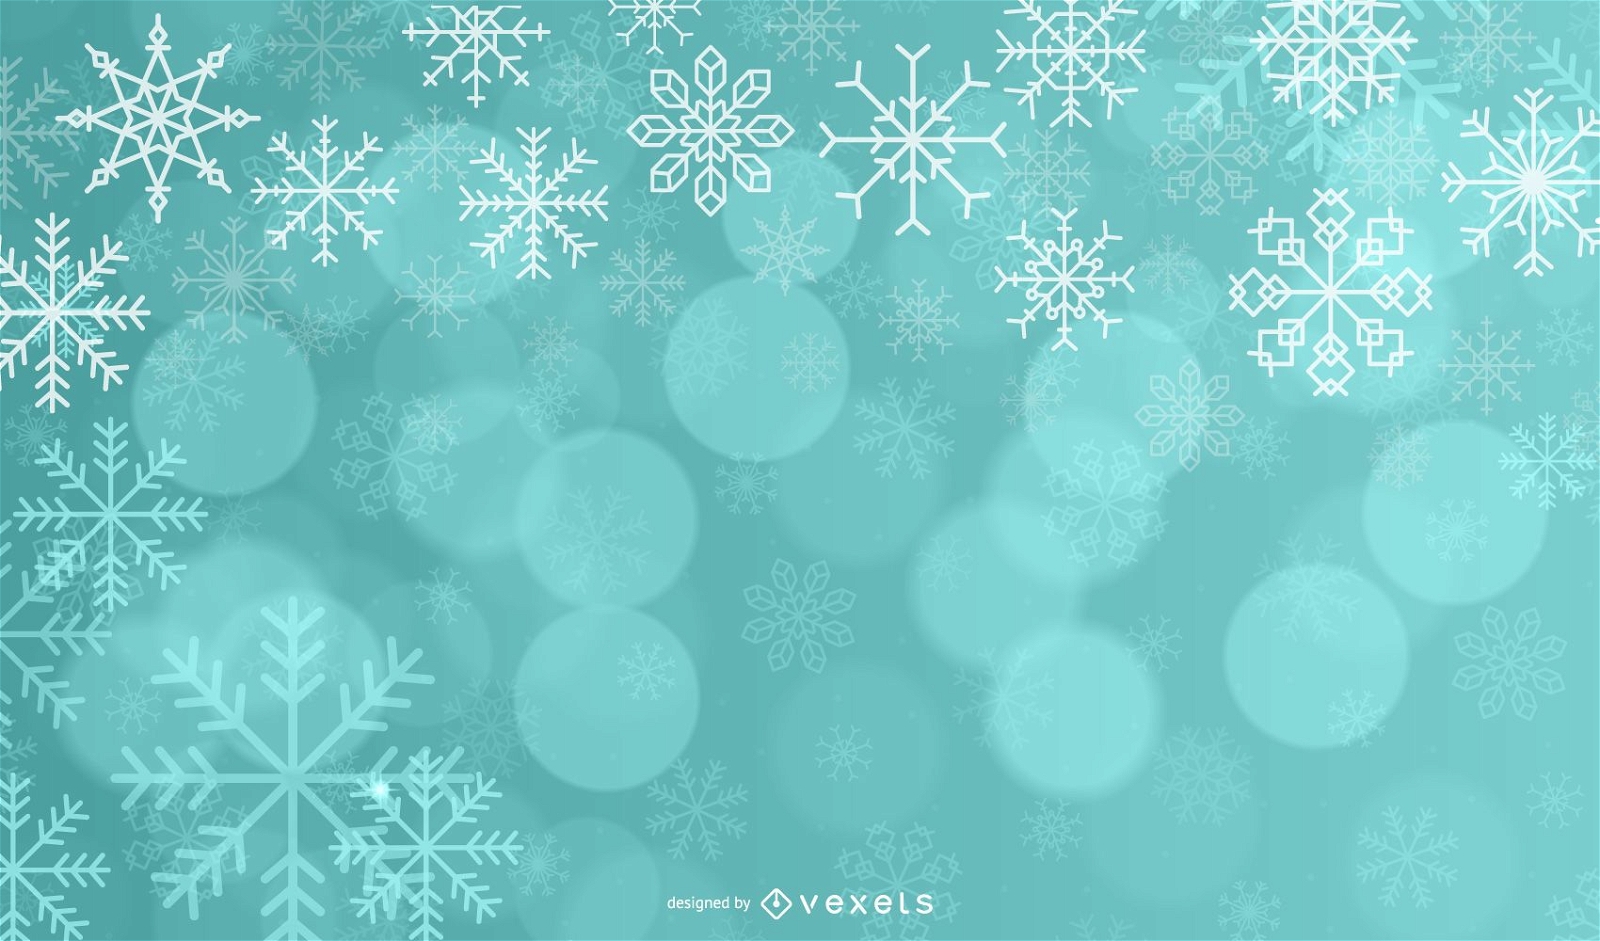 Blurry & Snowy Xmas Background Design